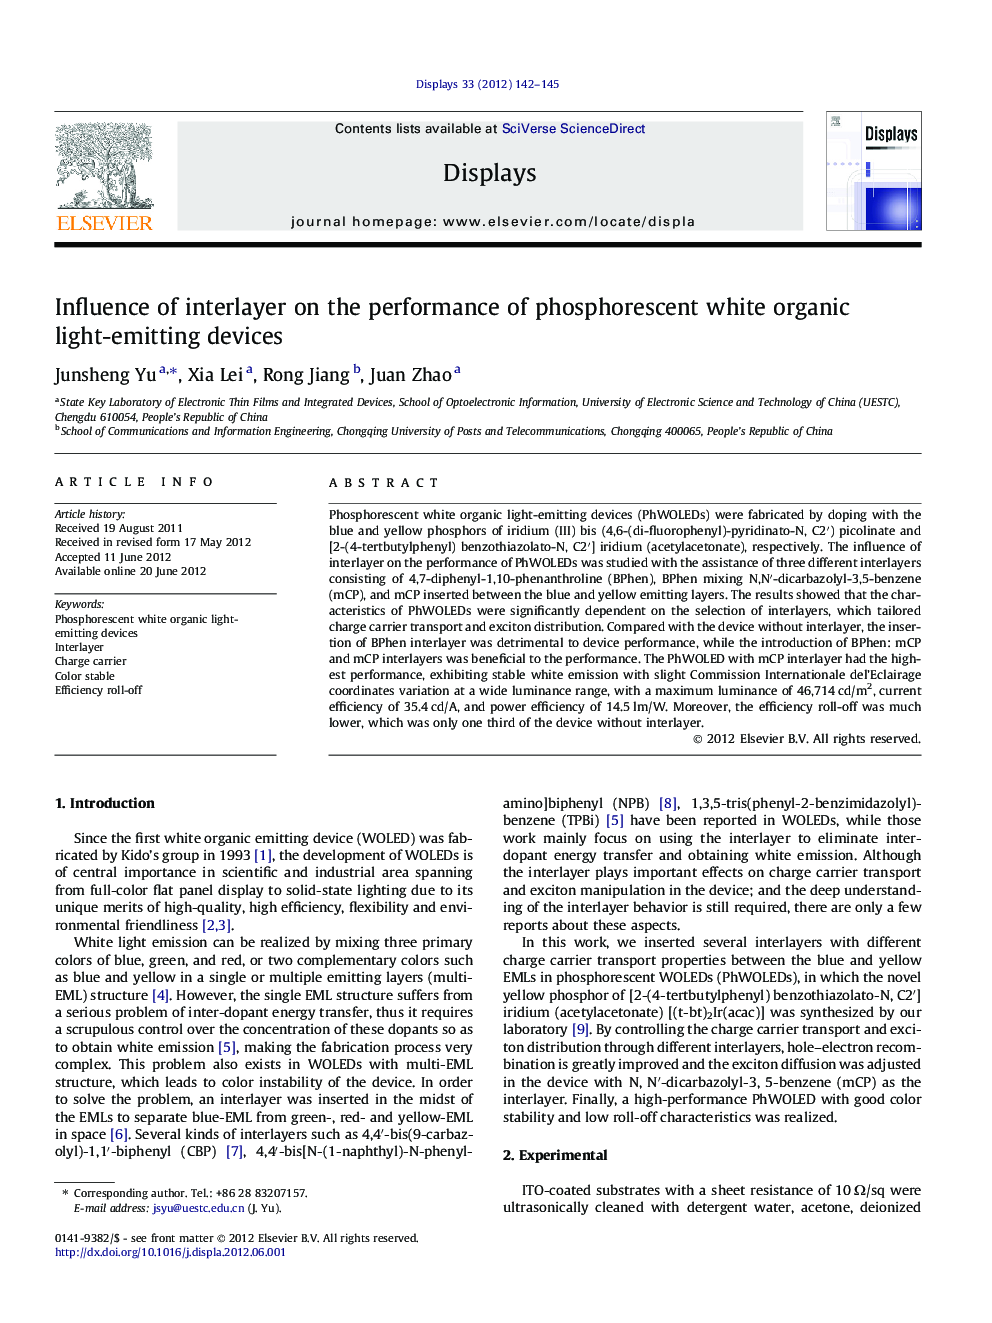 Influence of interlayer on the performance of phosphorescent white organic light-emitting devices